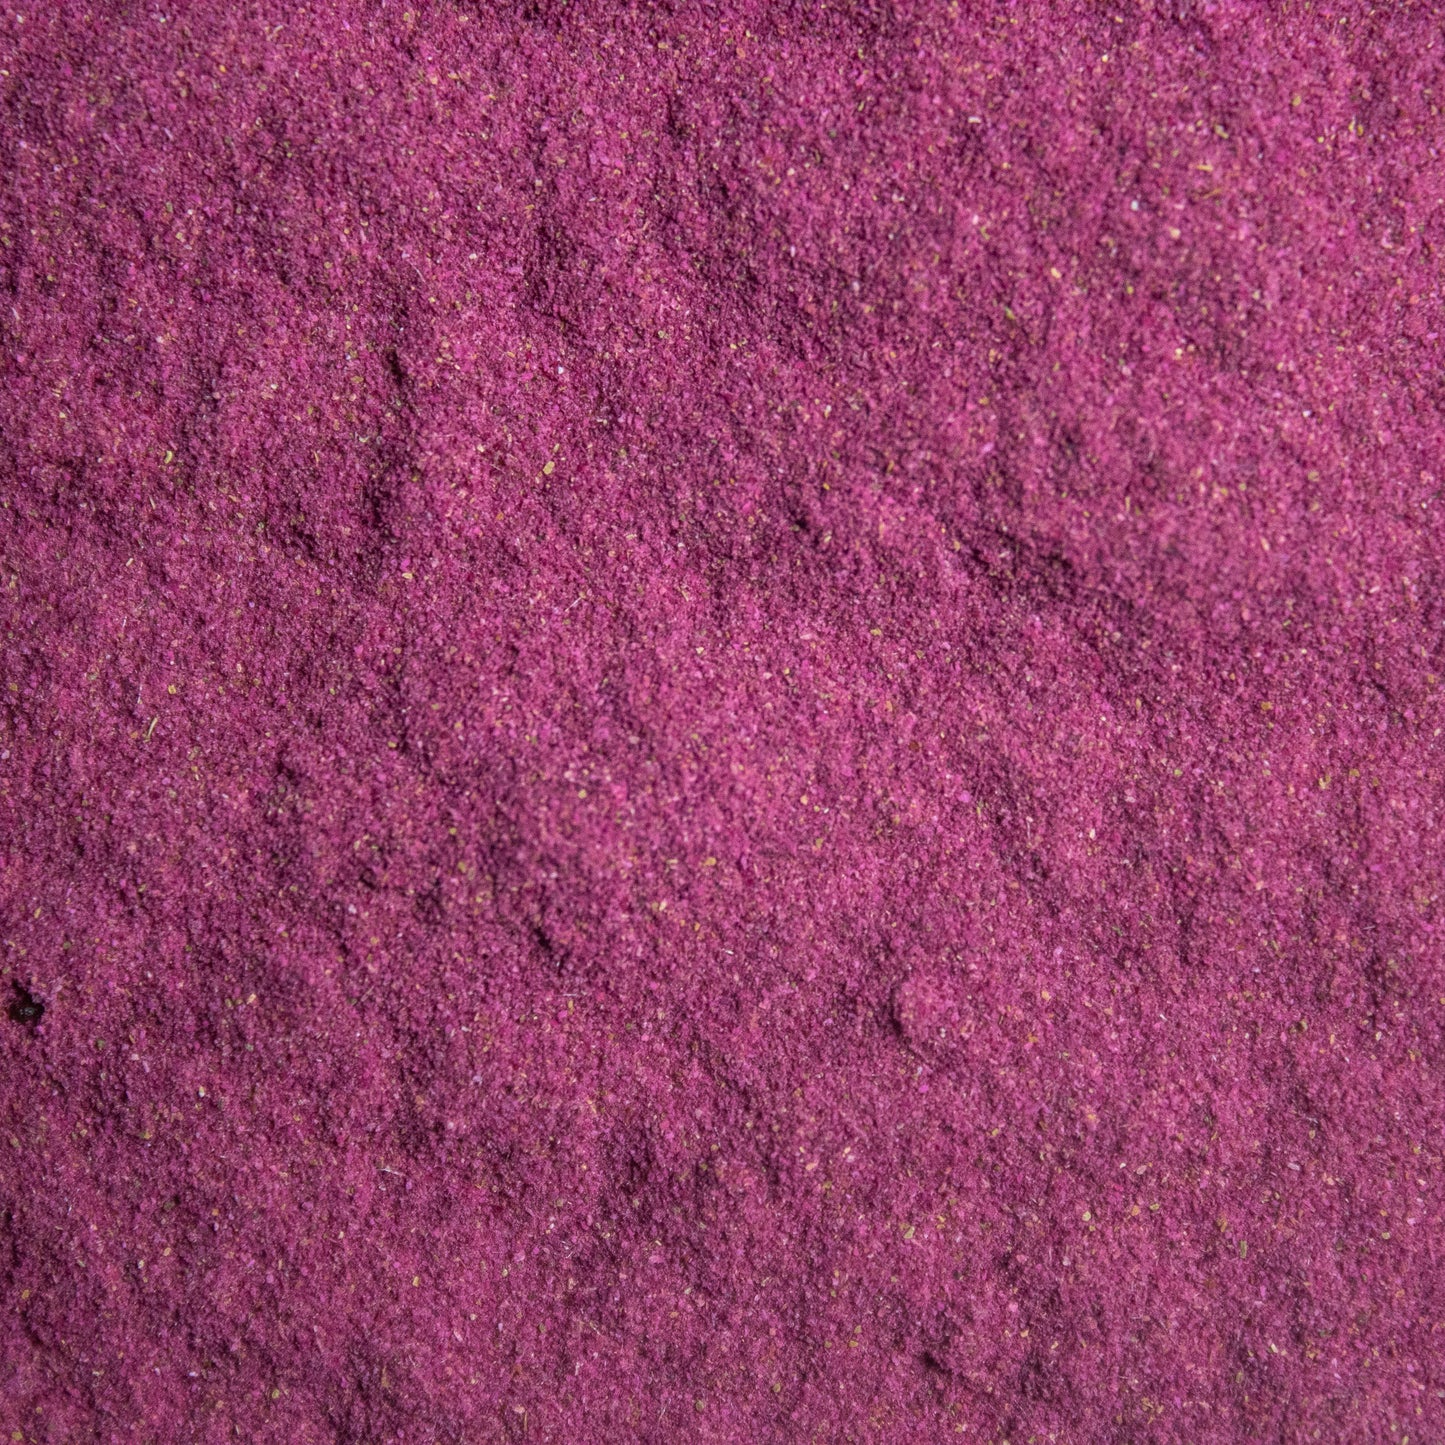 Organic Rose Petals Powder